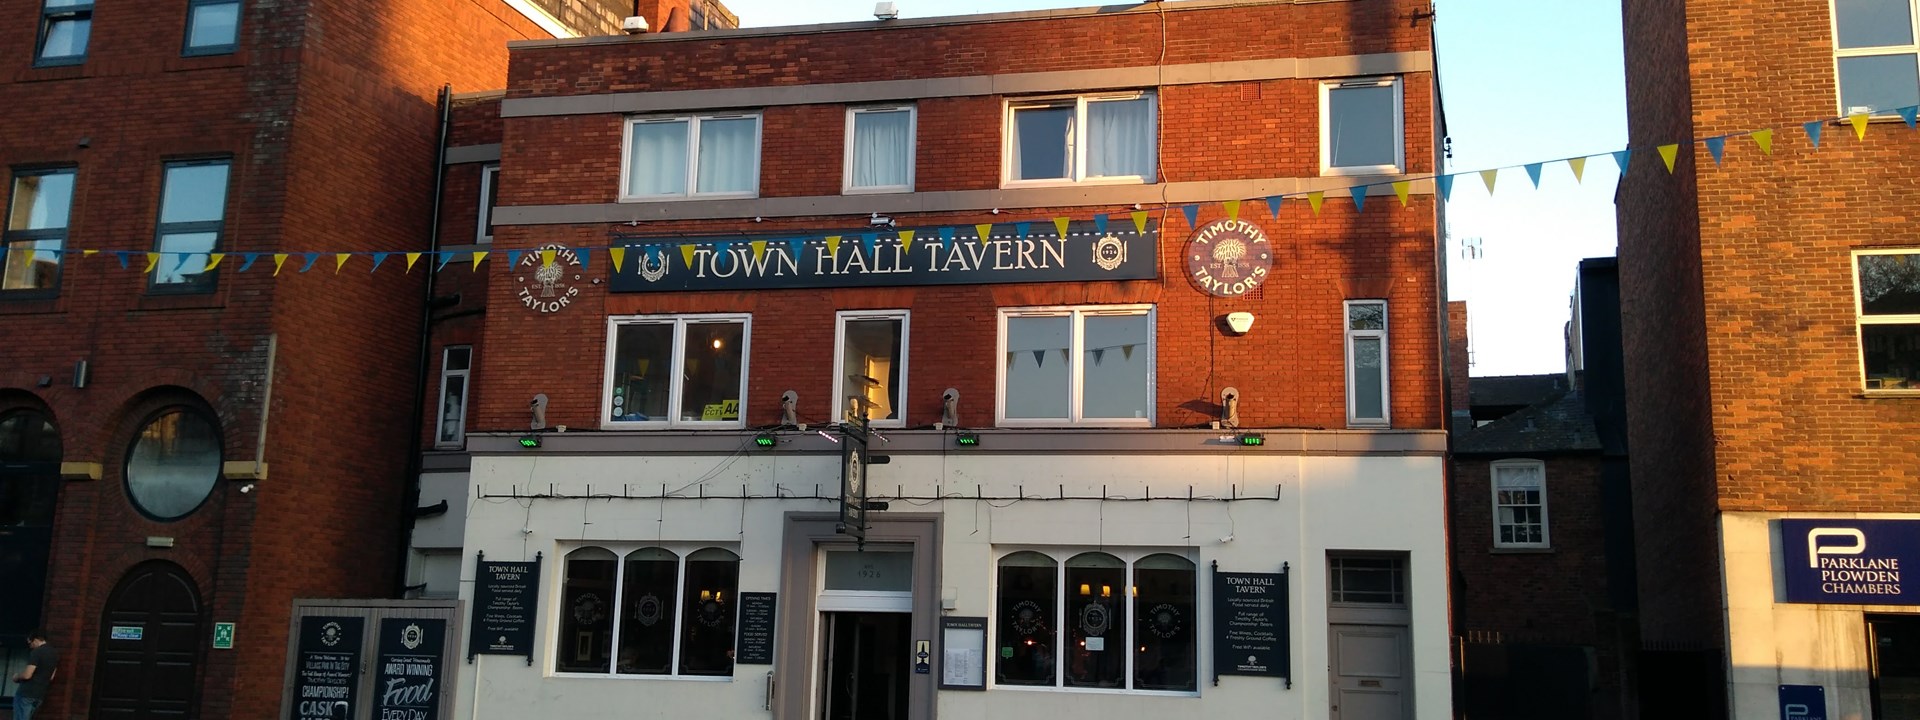 Leeds Town Hall Tavern